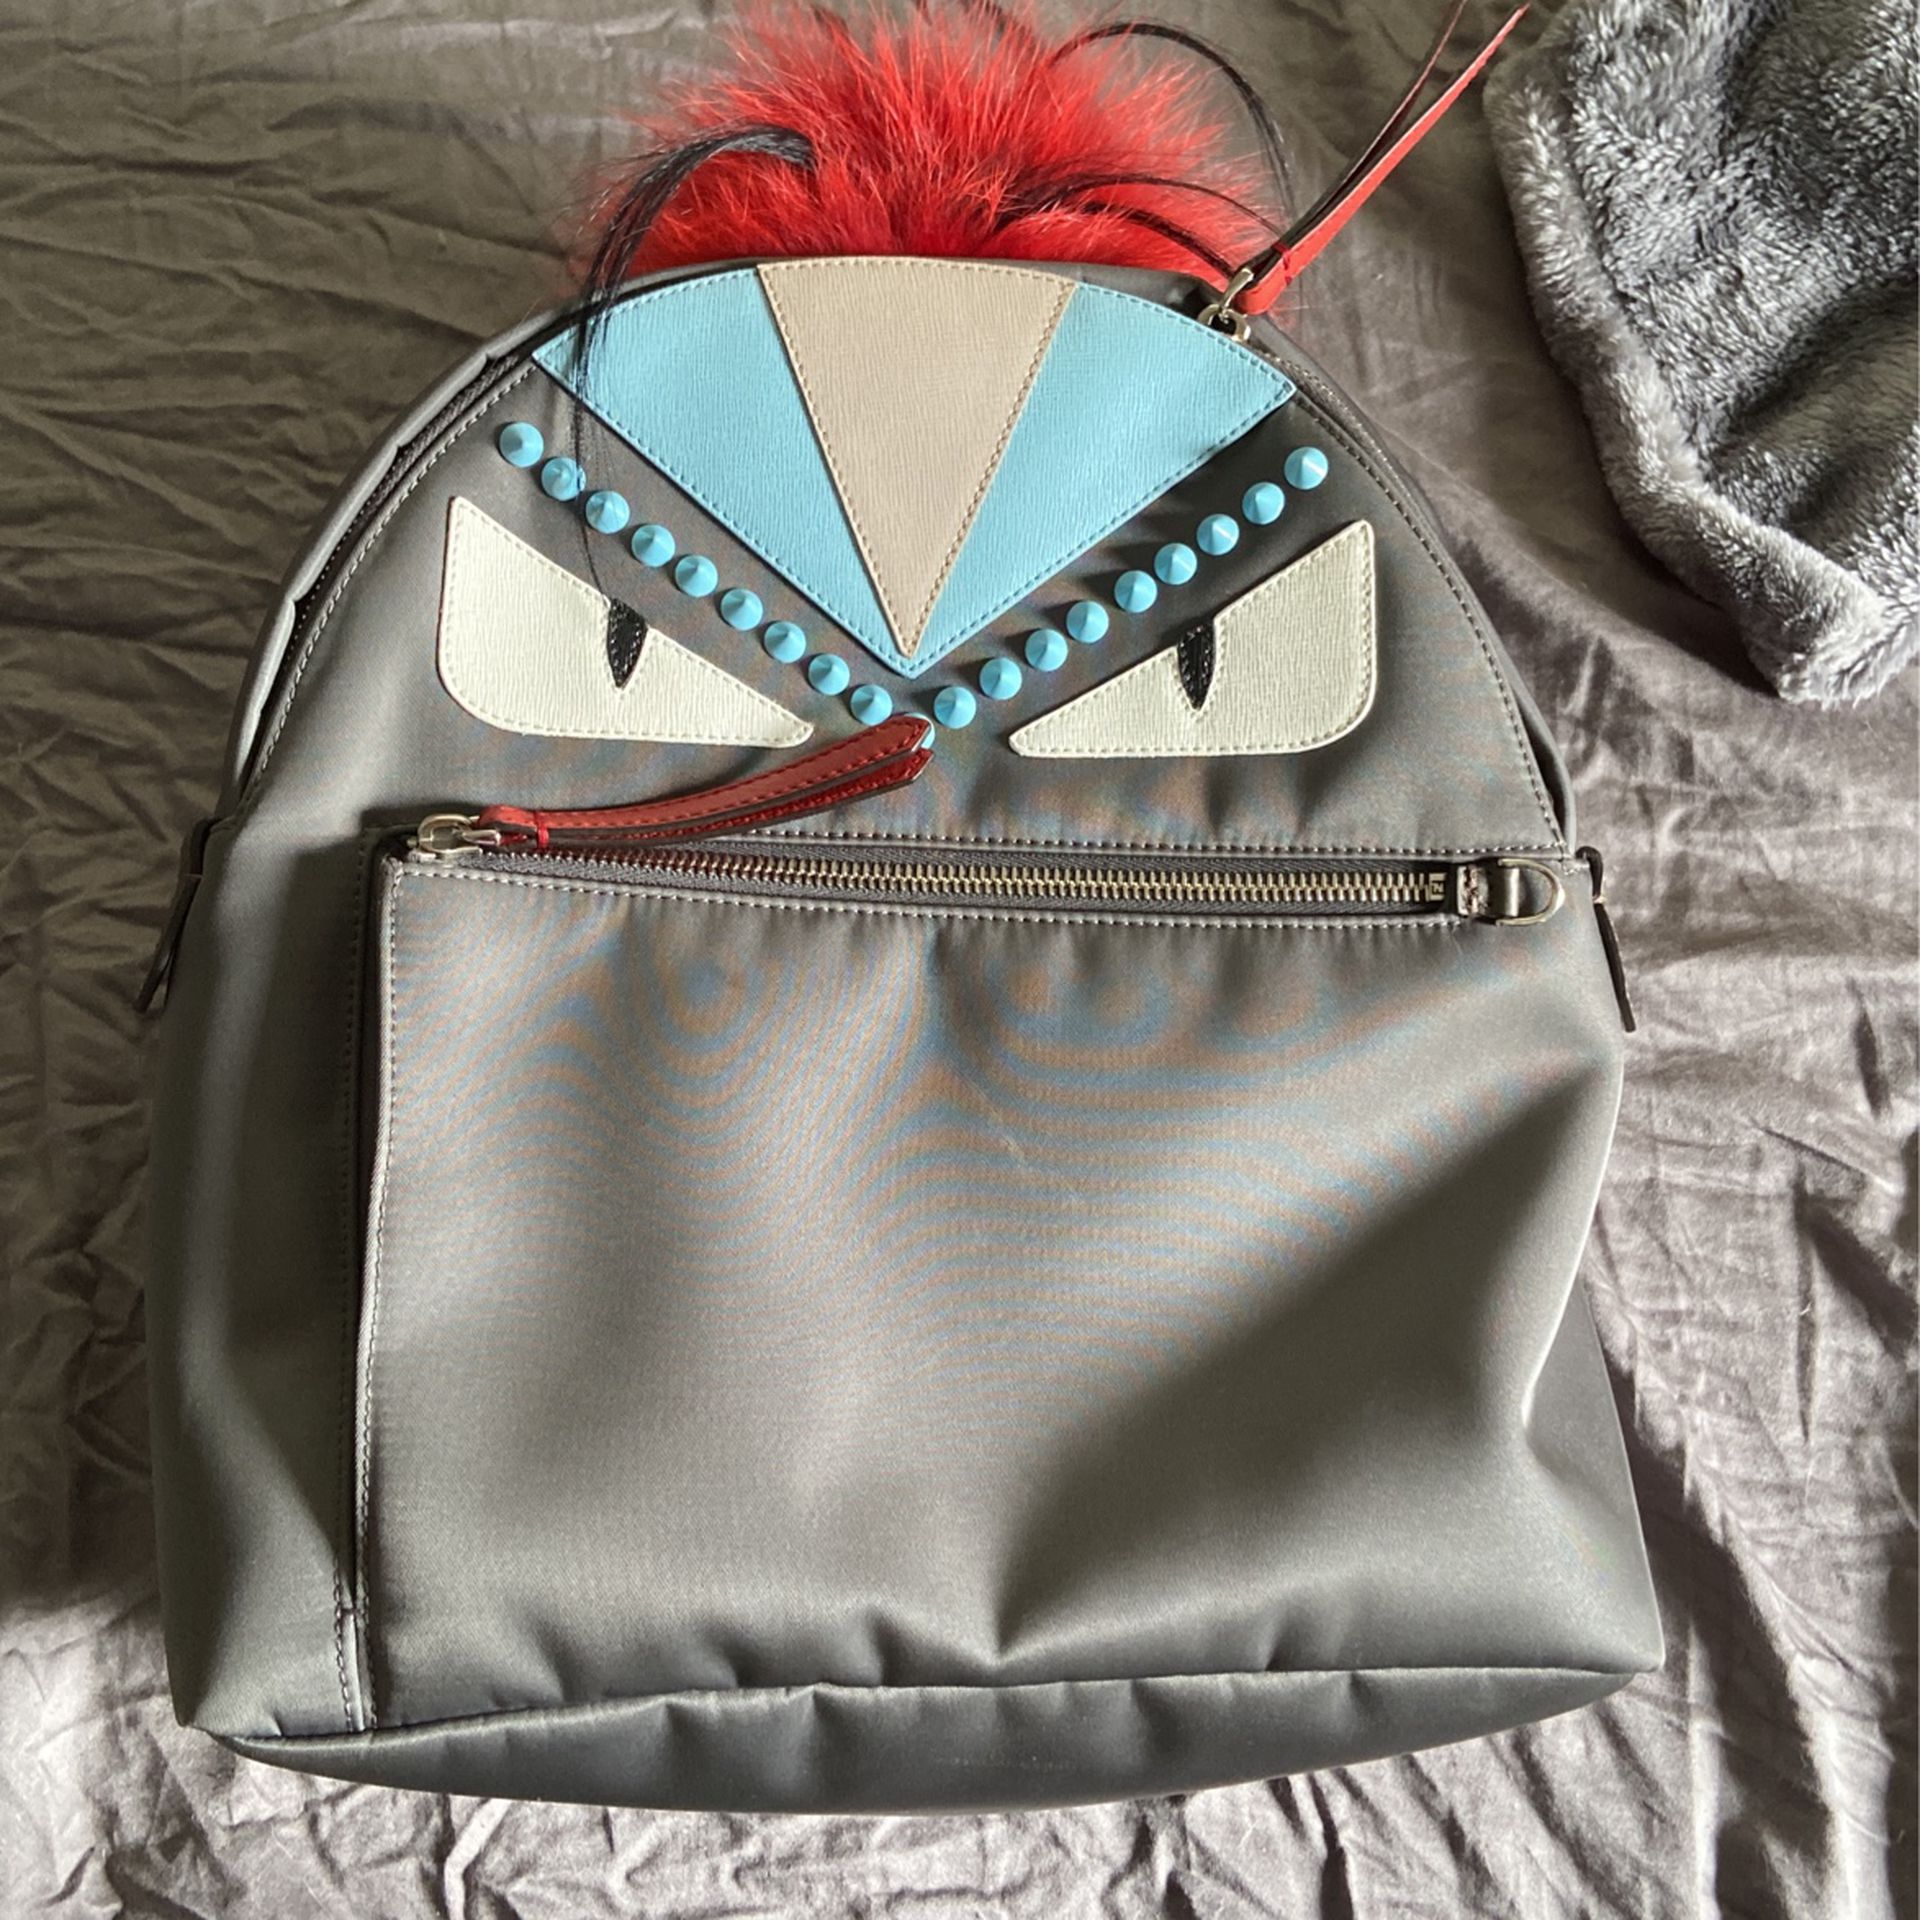 brand new fendi bookbag   ( 100% authentic )